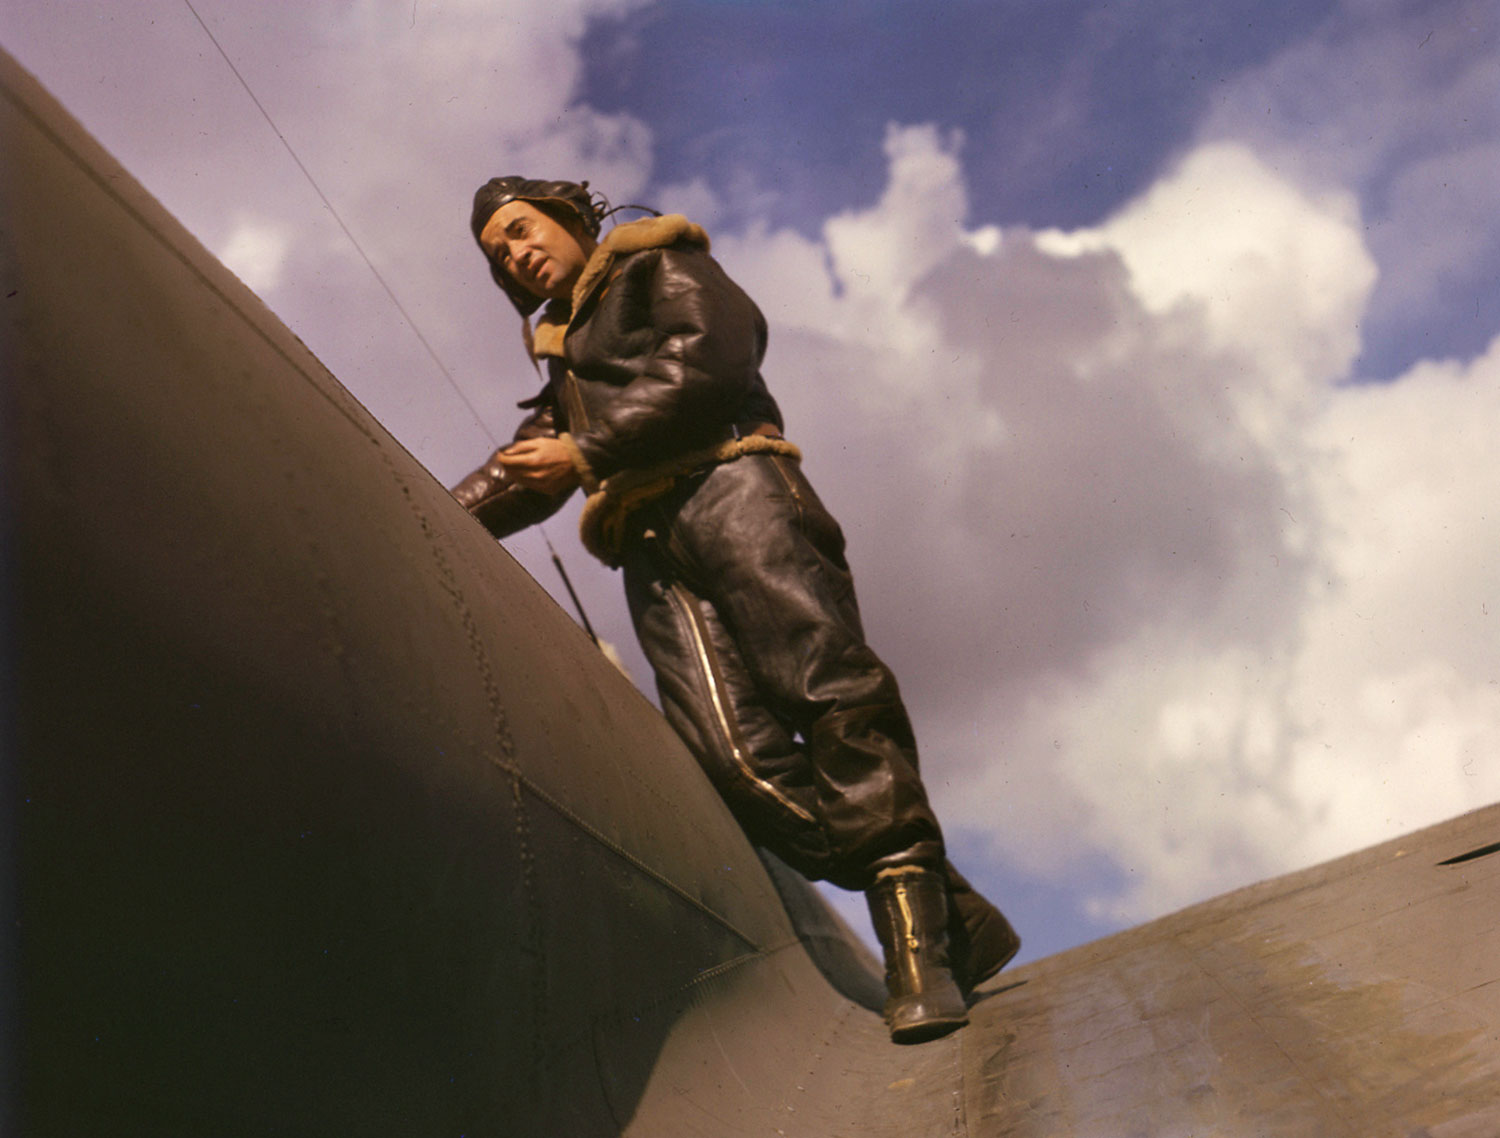 American bomber crew member during World War II, England, 1942.